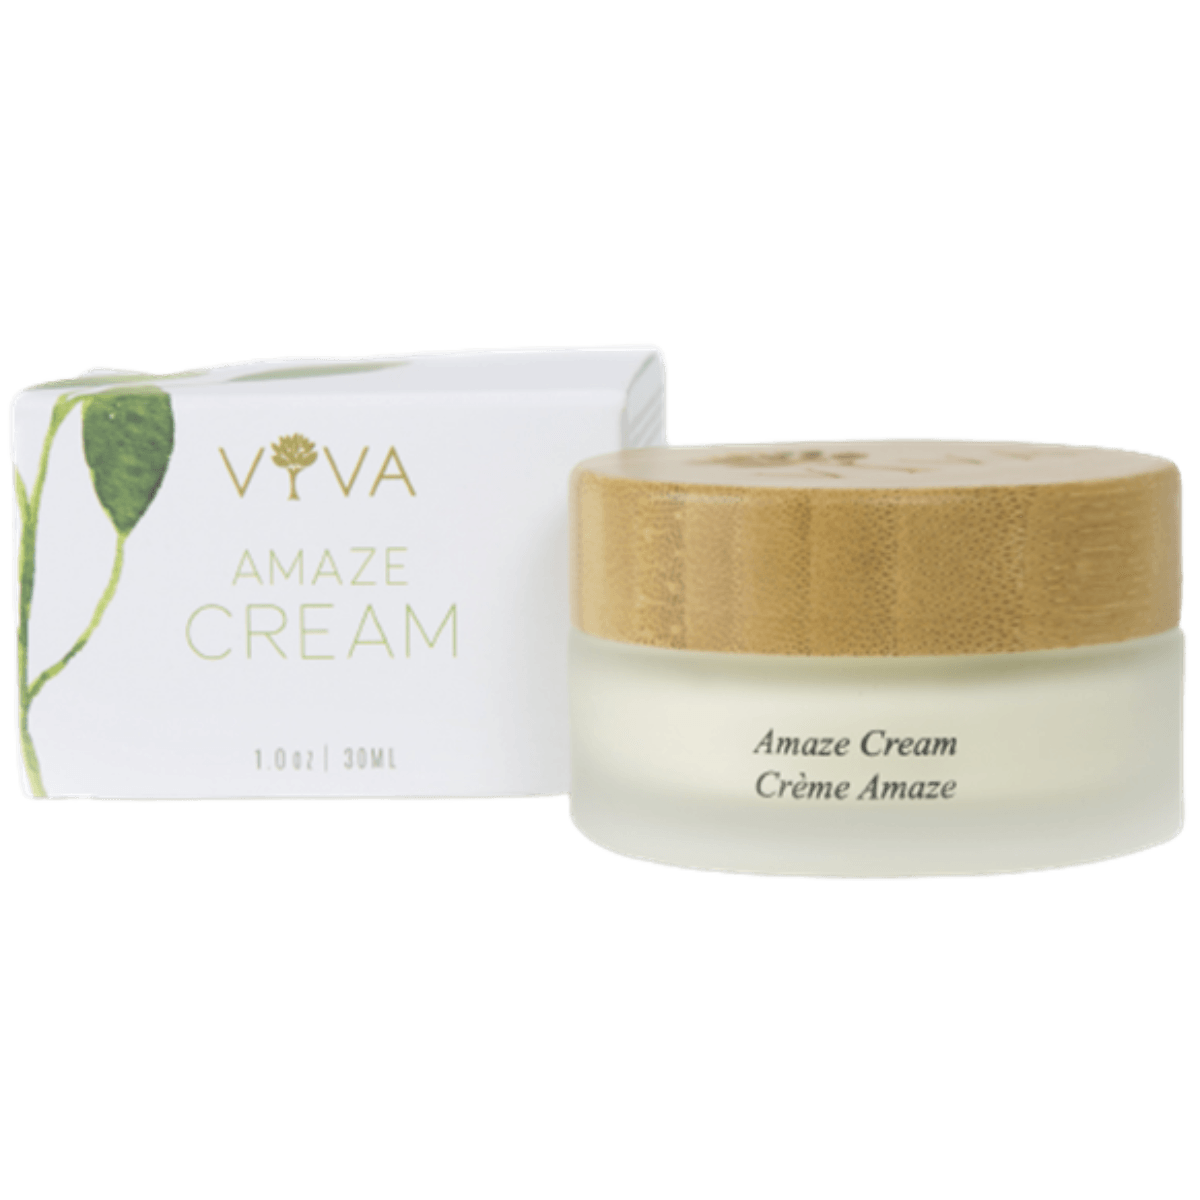 Viva Organics Amaze Cream 30mL Face Moisturizer at Village Vitamin Store